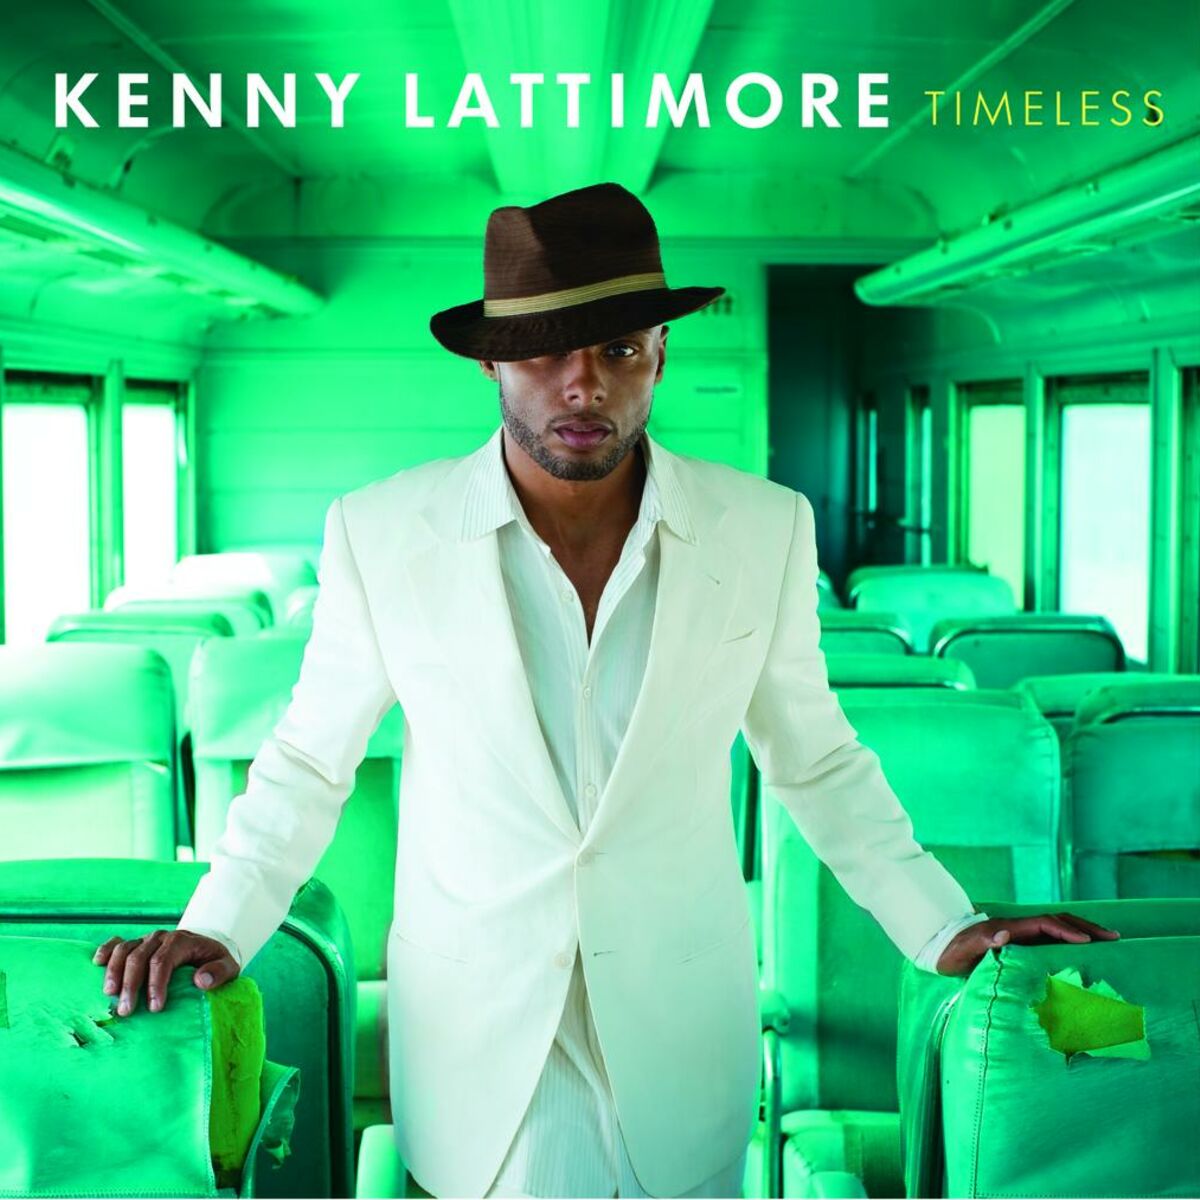 Kenny Lattimore: albums